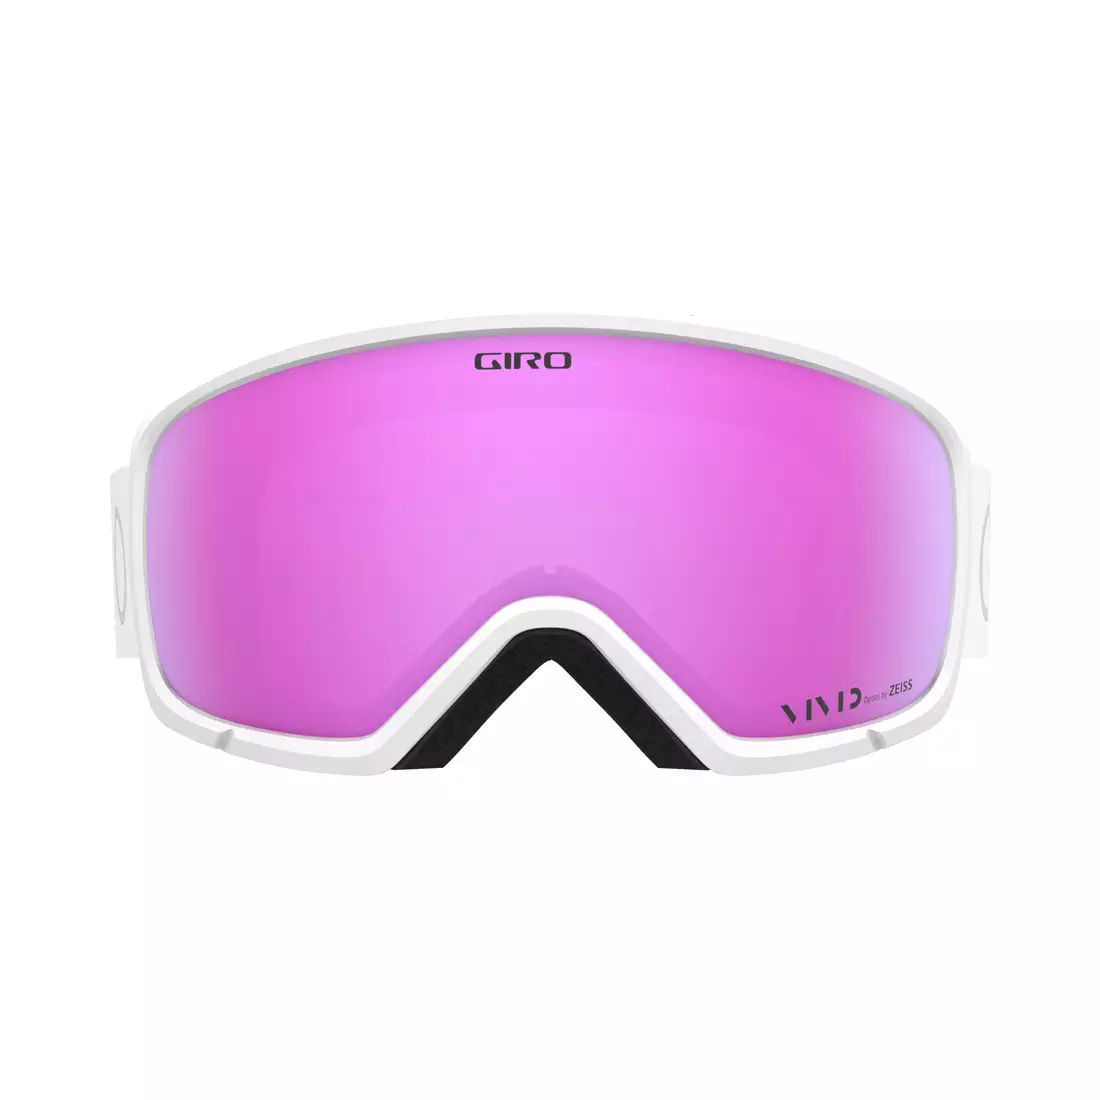 GIRO dámske zimné lyžiarske/snowboardové okuliare millie white core light (VIVID PINK 32% S2) GR-7119835